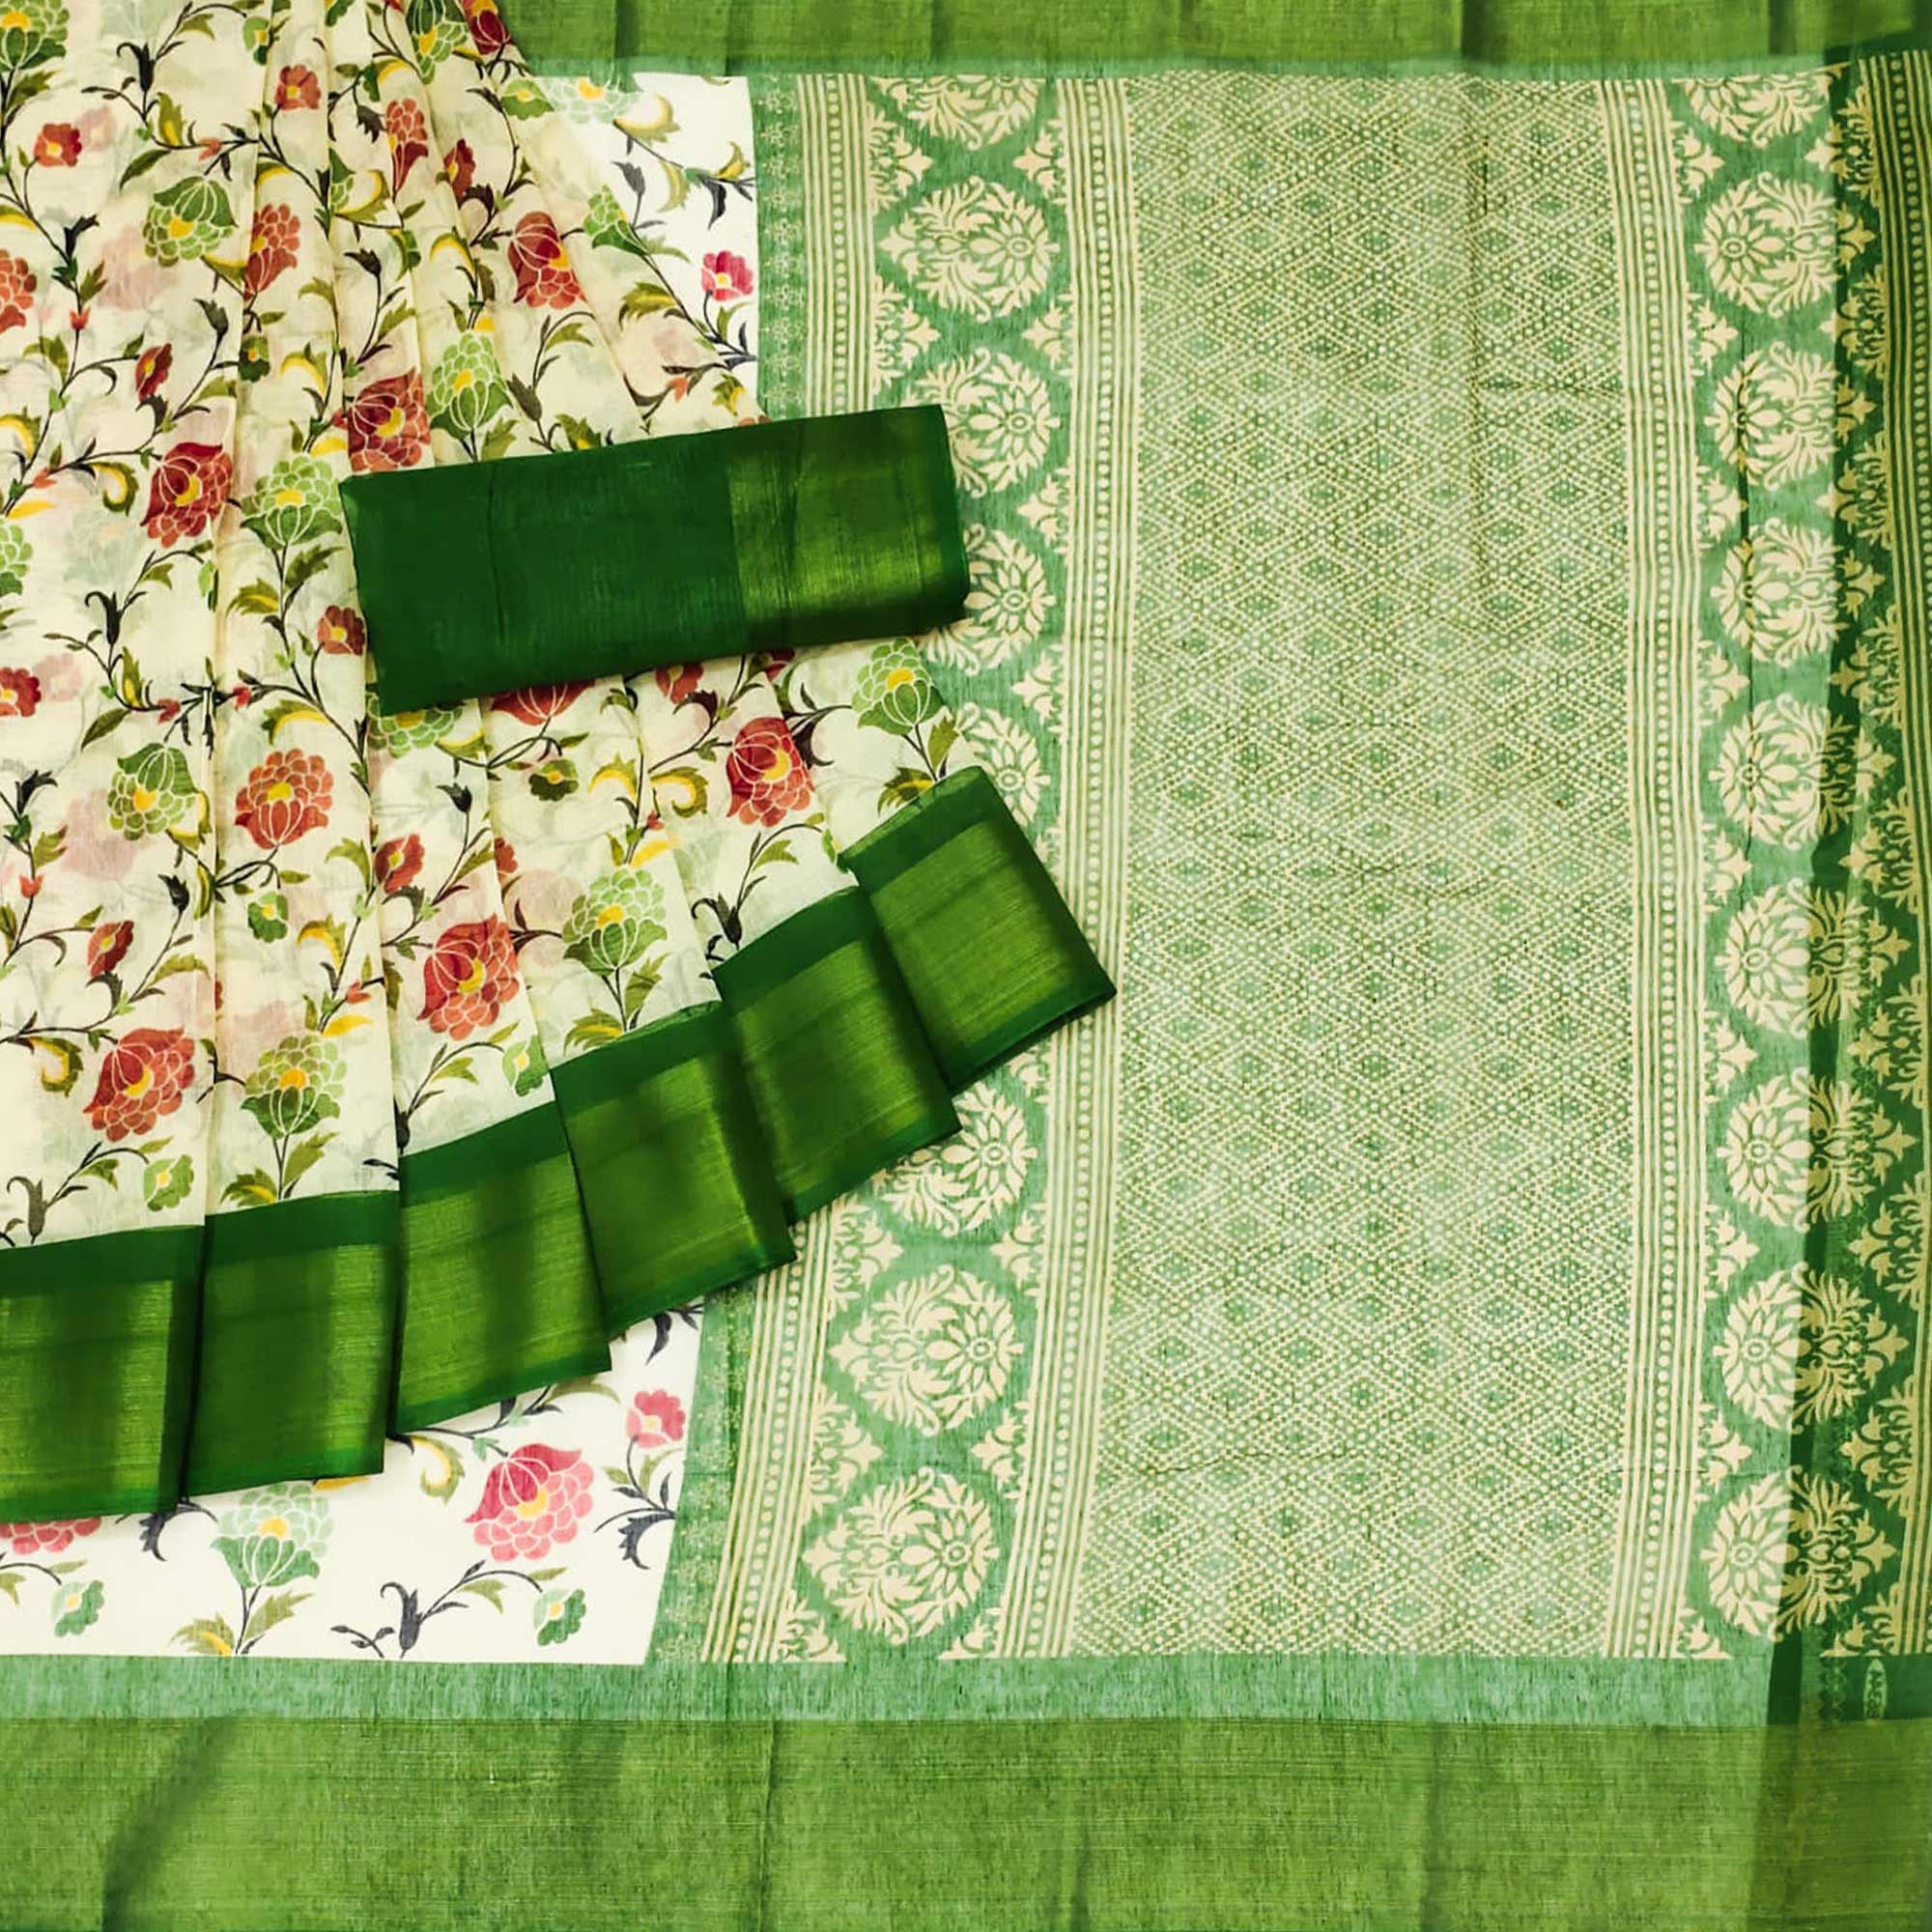 White & Green Floral Printed Cotton Blend Saree